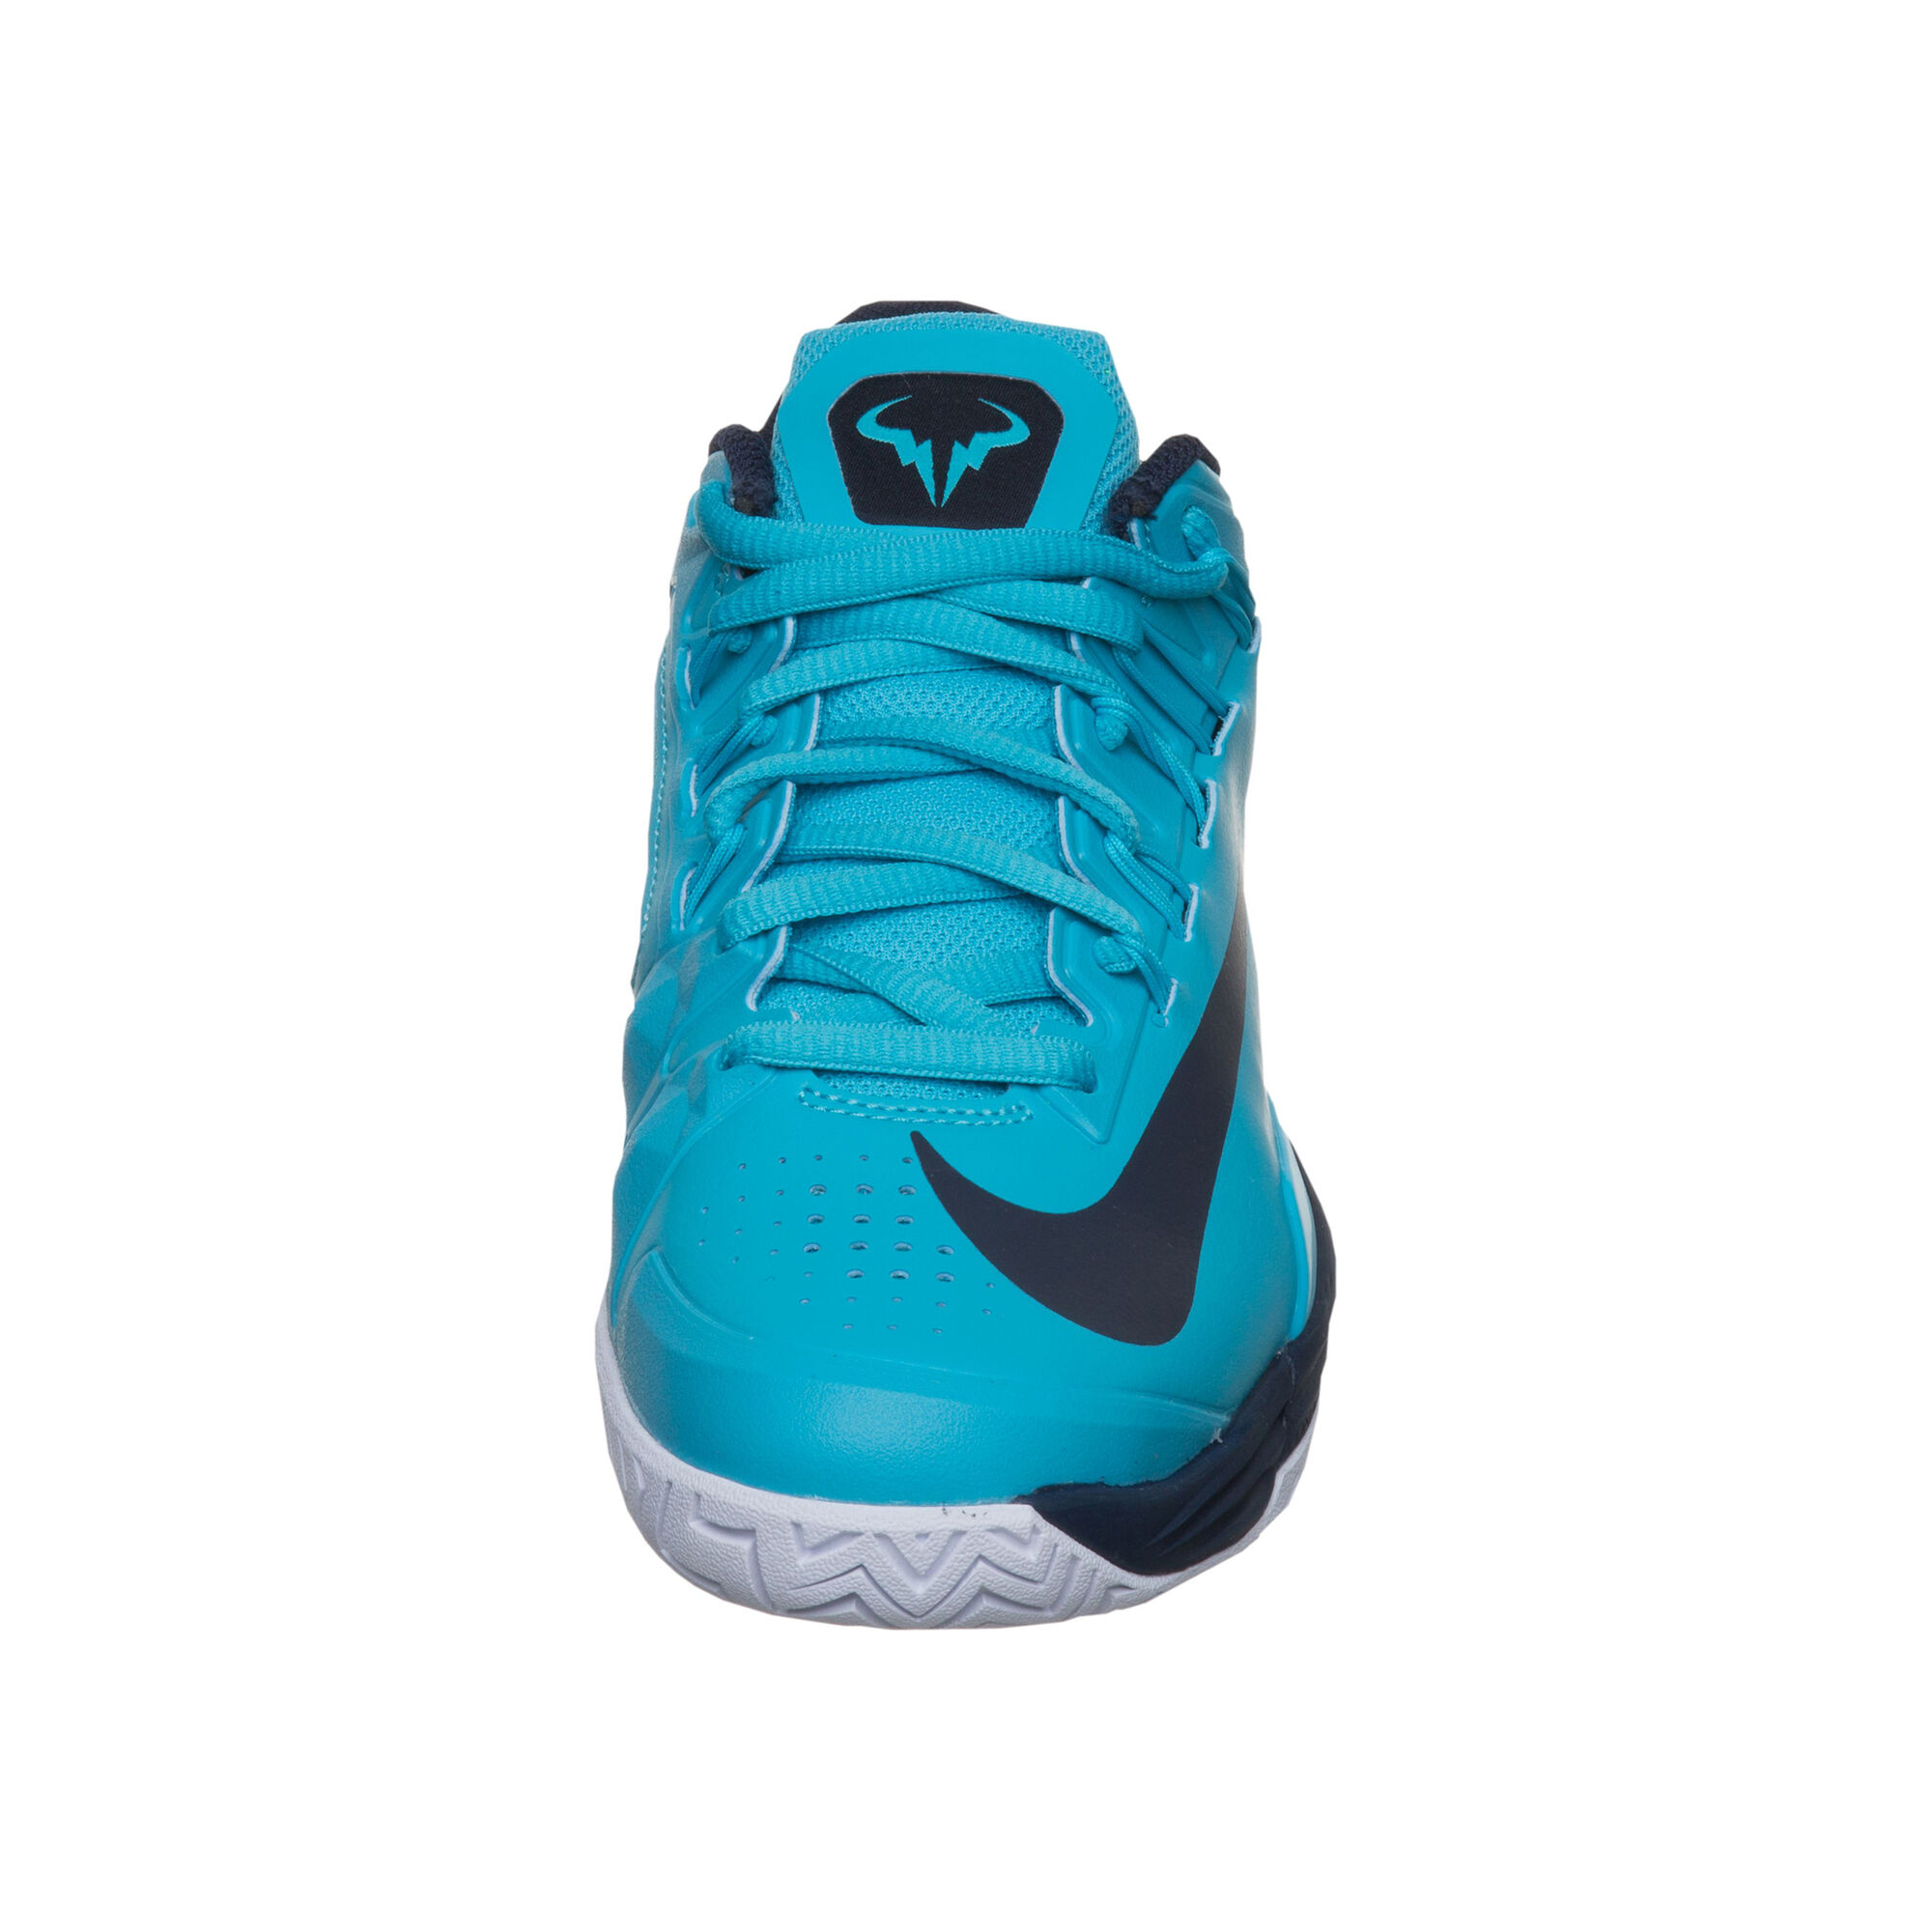 Pulido heredar rojo buy Nike Rafael Nadal Lunar Ballistec 1.5 LG Quickstrike Limited Edition  All Court Shoe Kids - Turquoise, Dark Blue online | Tennis-Point